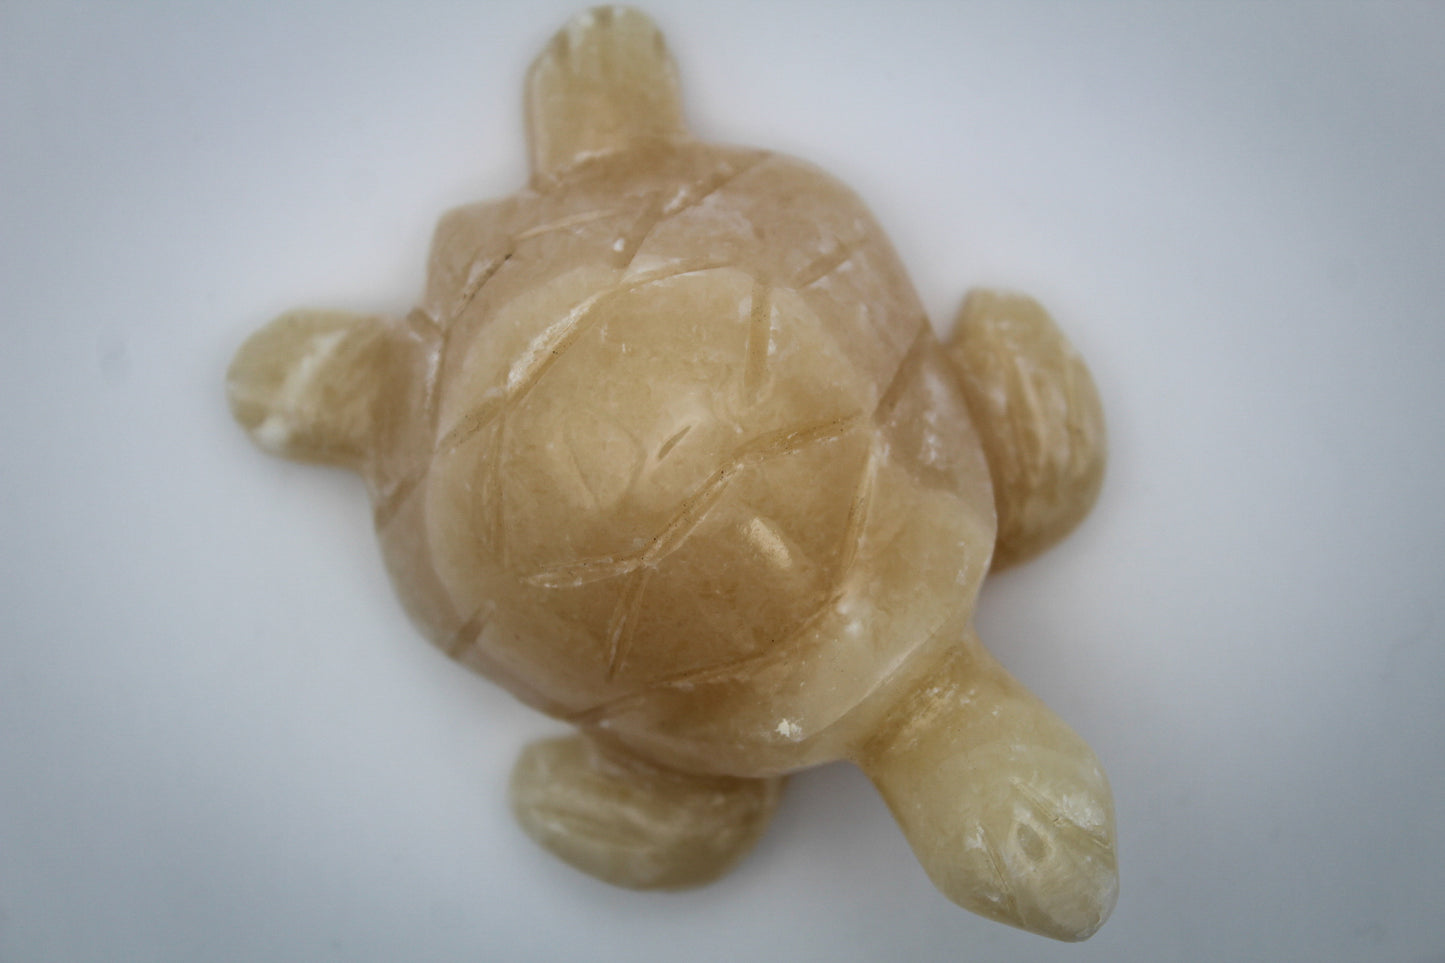 Sea turtle carving